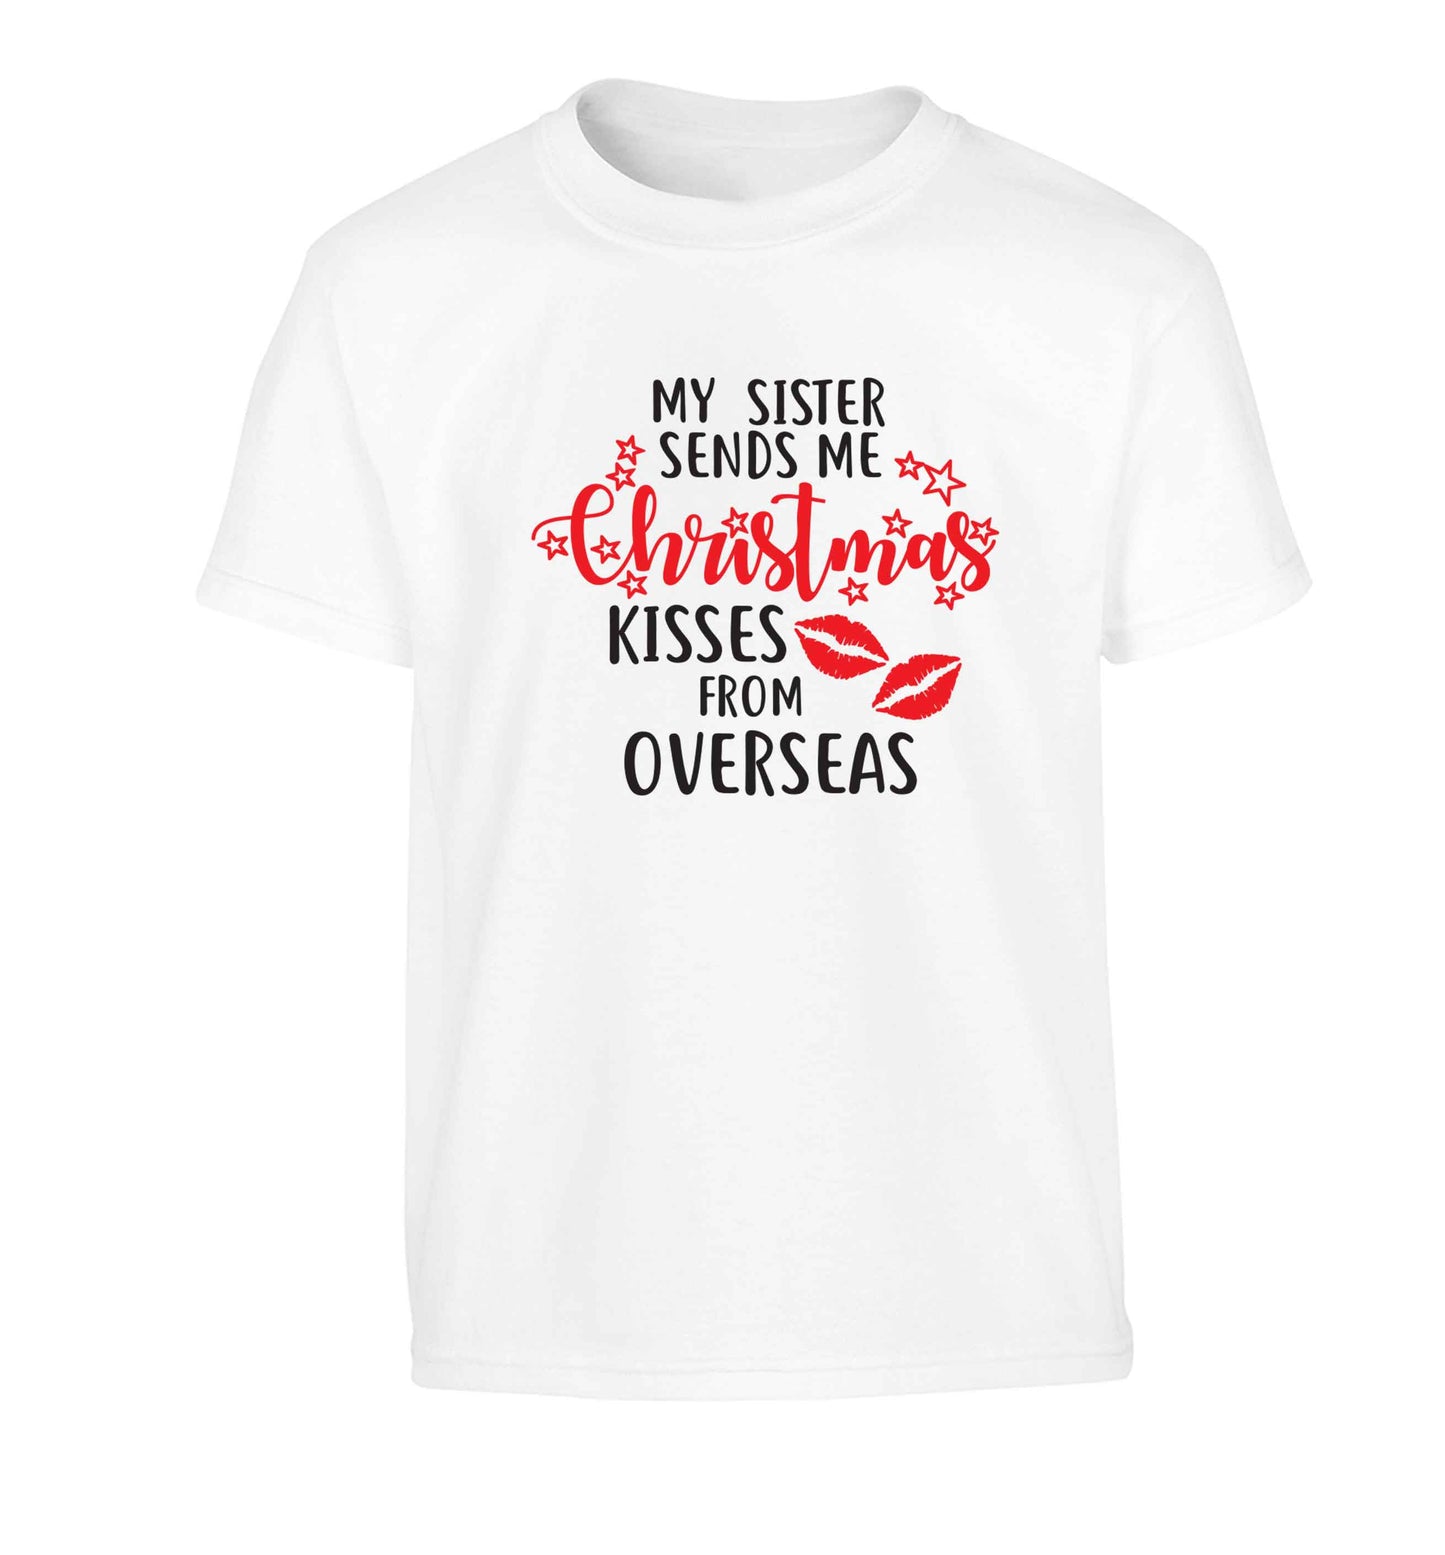 Grandad Christmas Kisses Overseas Children's white Tshirt 12-13 Years